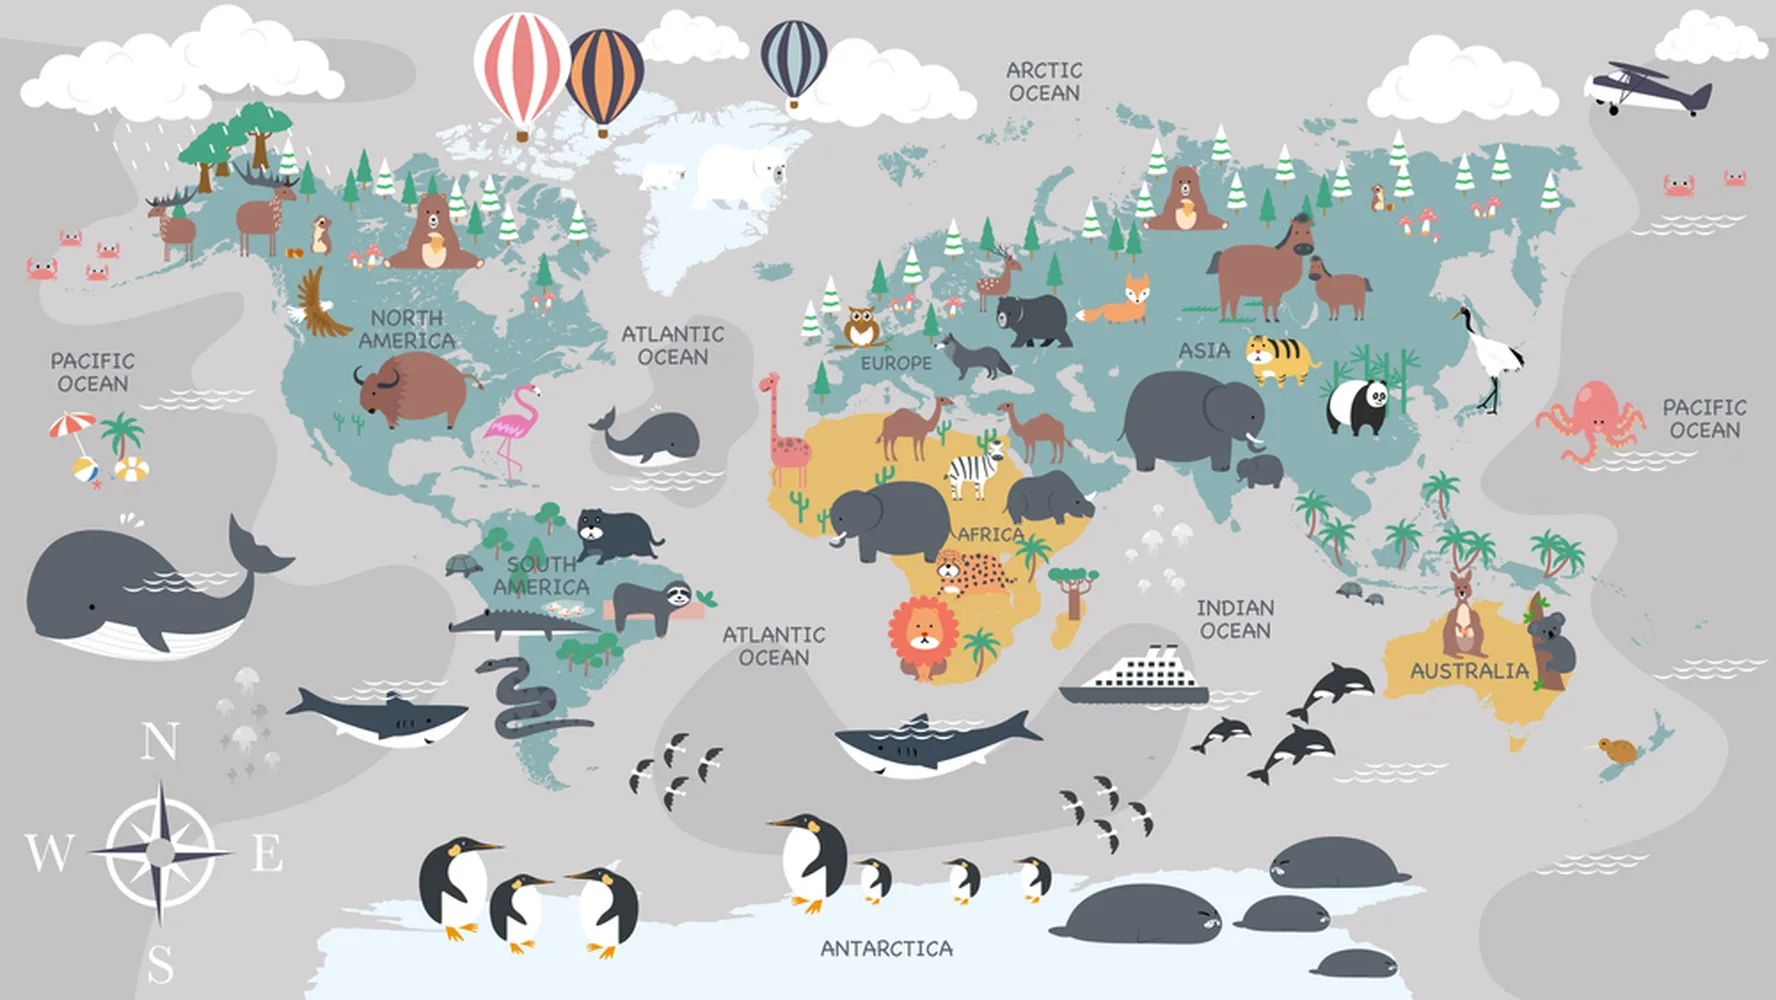 پوستر سه بعدی مدرسه طرح نقشه جهان حیوانات کارتونی